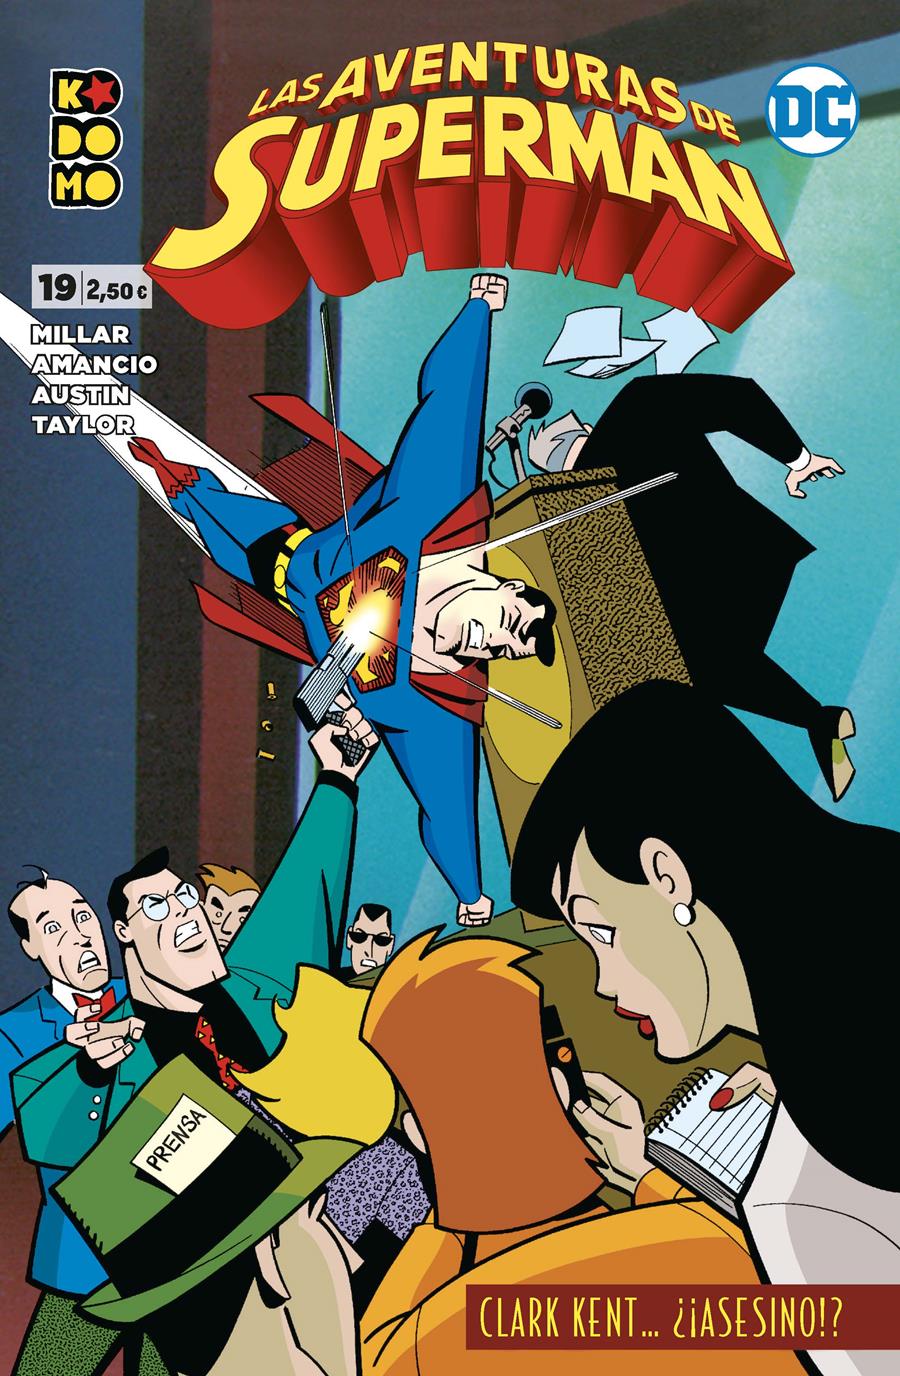 Las aventuras de Superman núm. 19 | N1122-ECC50 | Aluir Amancio / Mark Millar | Terra de Còmic - Tu tienda de cómics online especializada en cómics, manga y merchandising